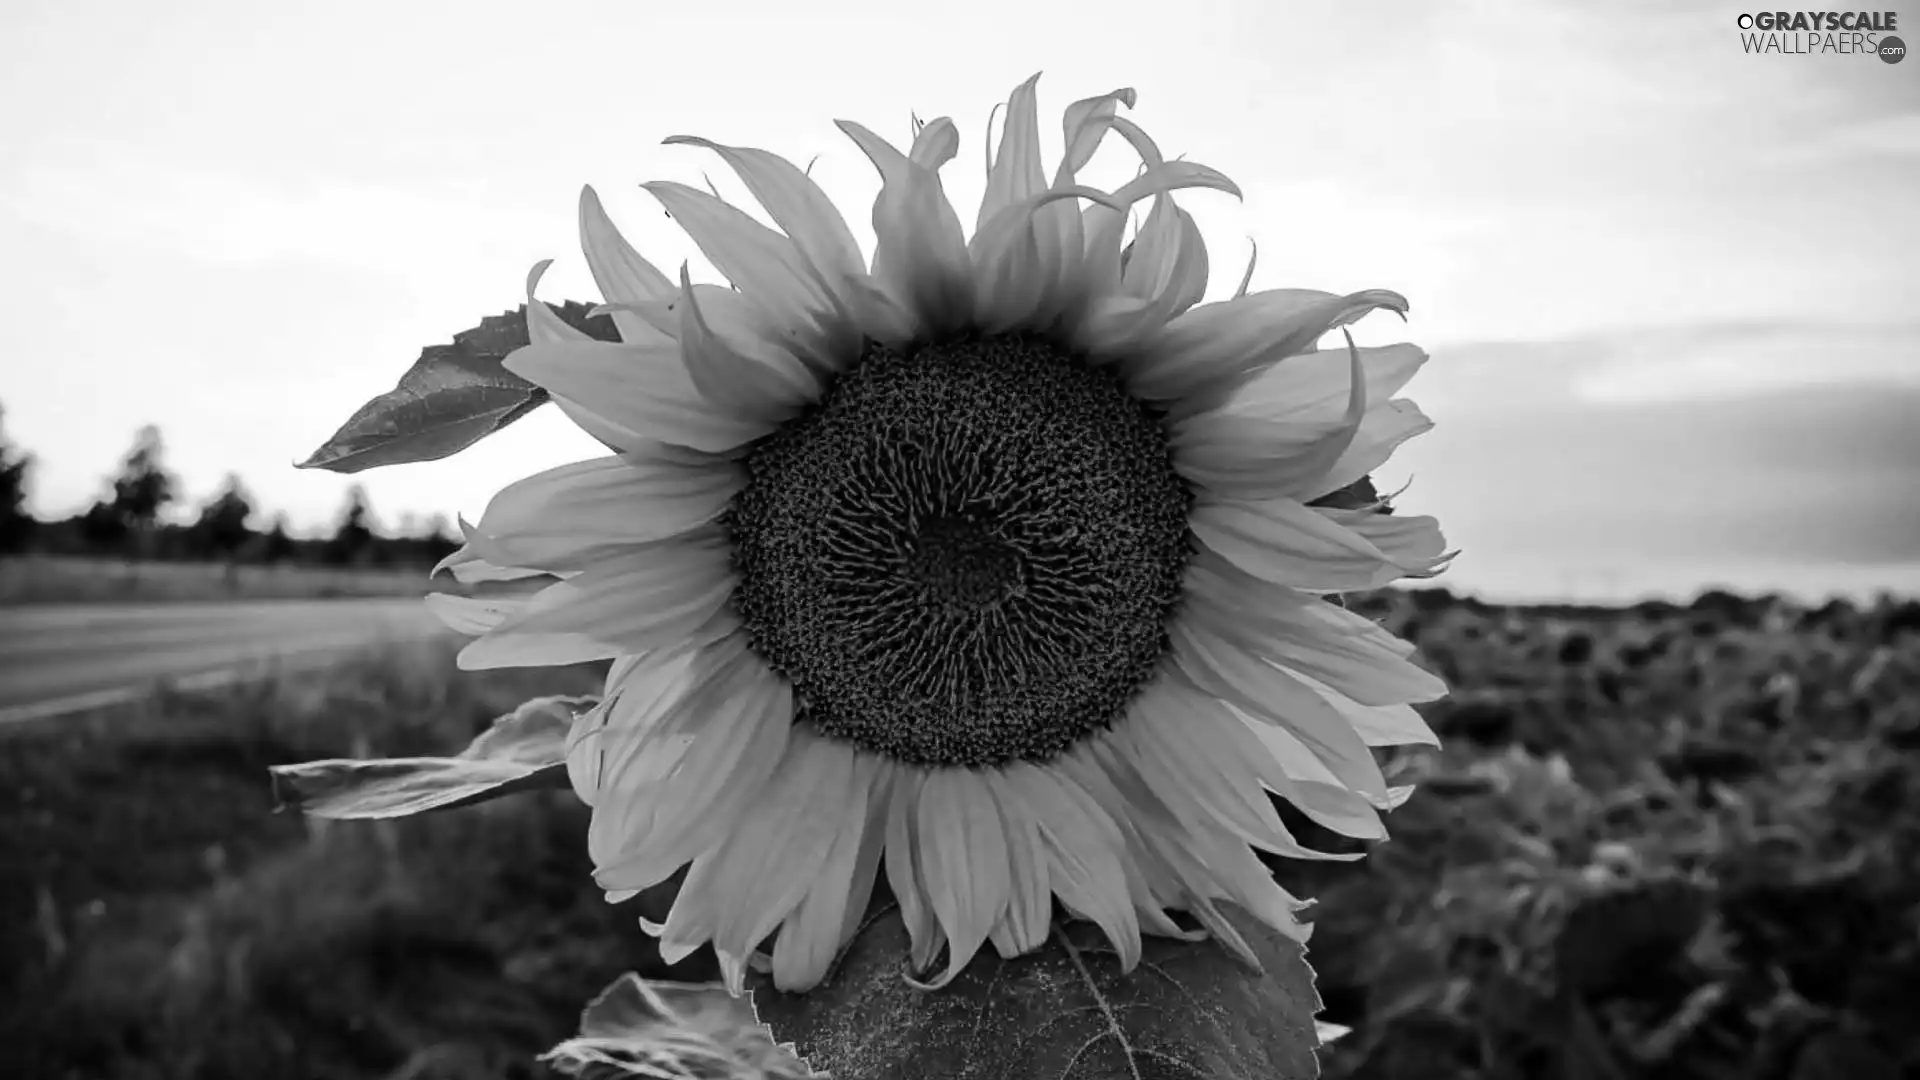 Field, Sunflower